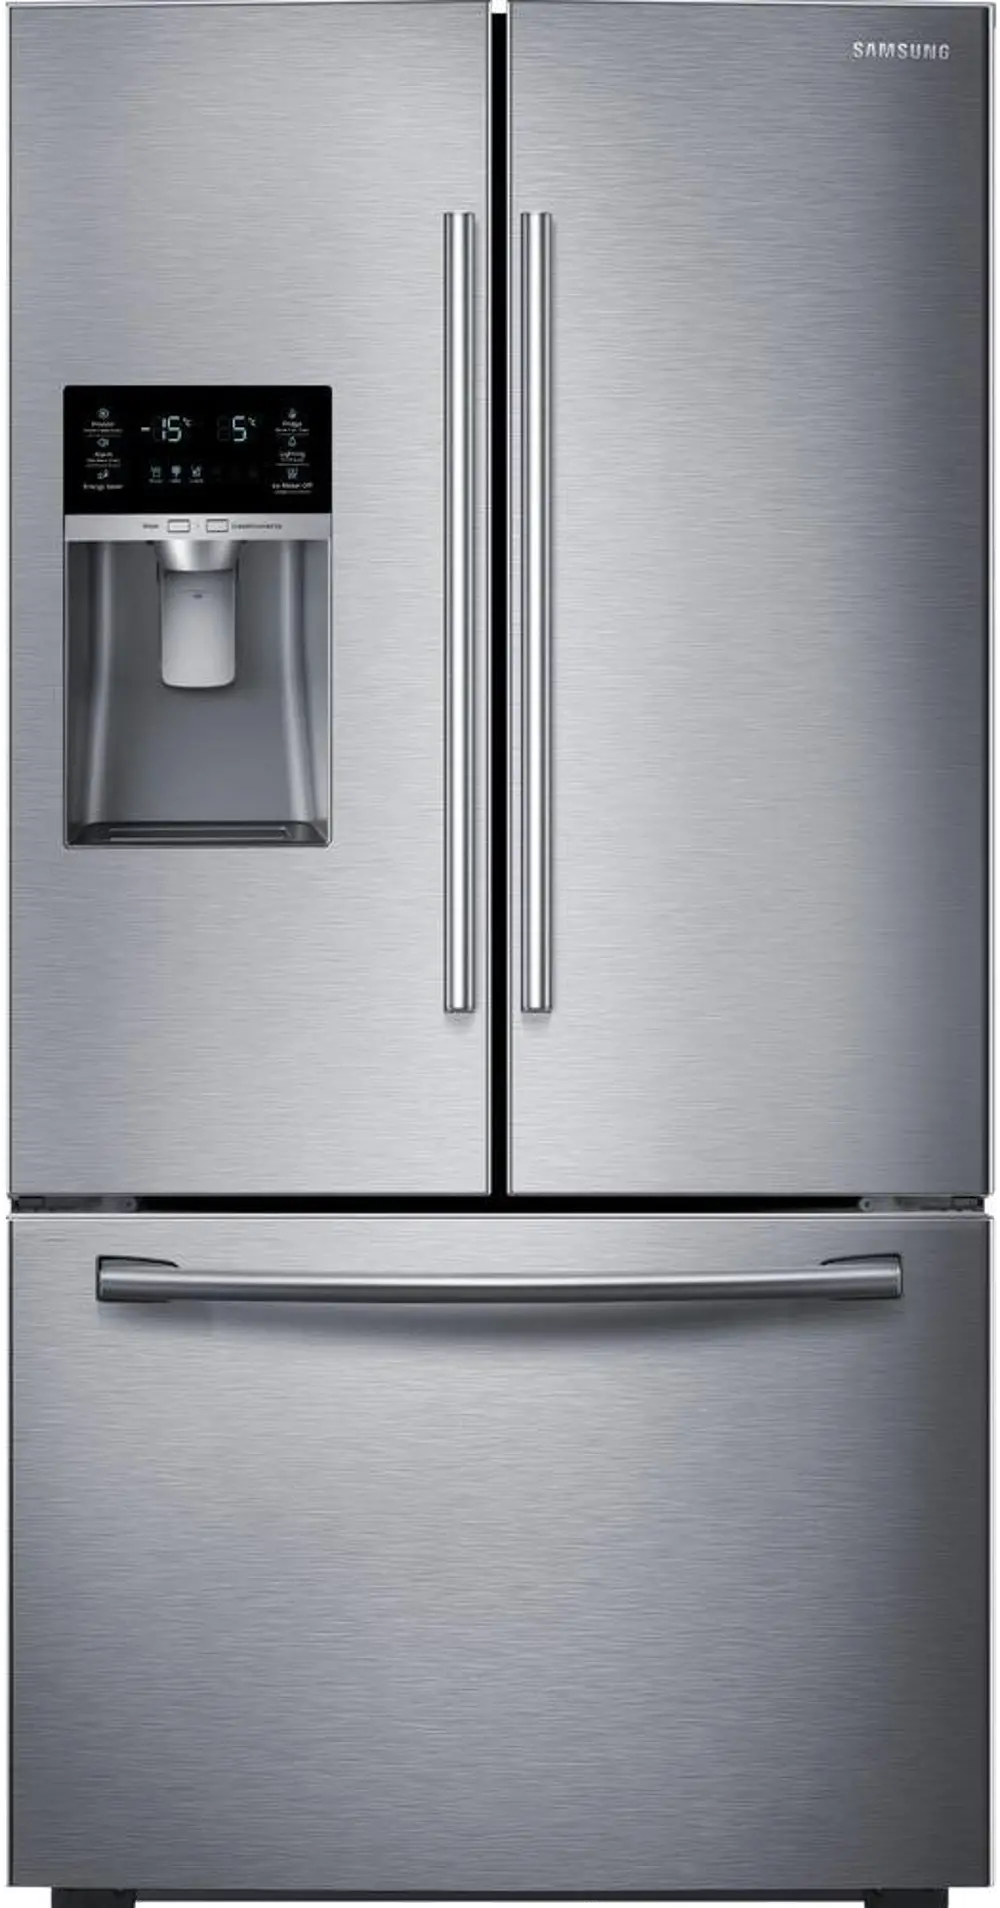 RF23HCEDBSR Samsung Counter Depth French Door Smart Refrigerator - 22.5 cu. ft., 36 Inch Stainless Steel-1